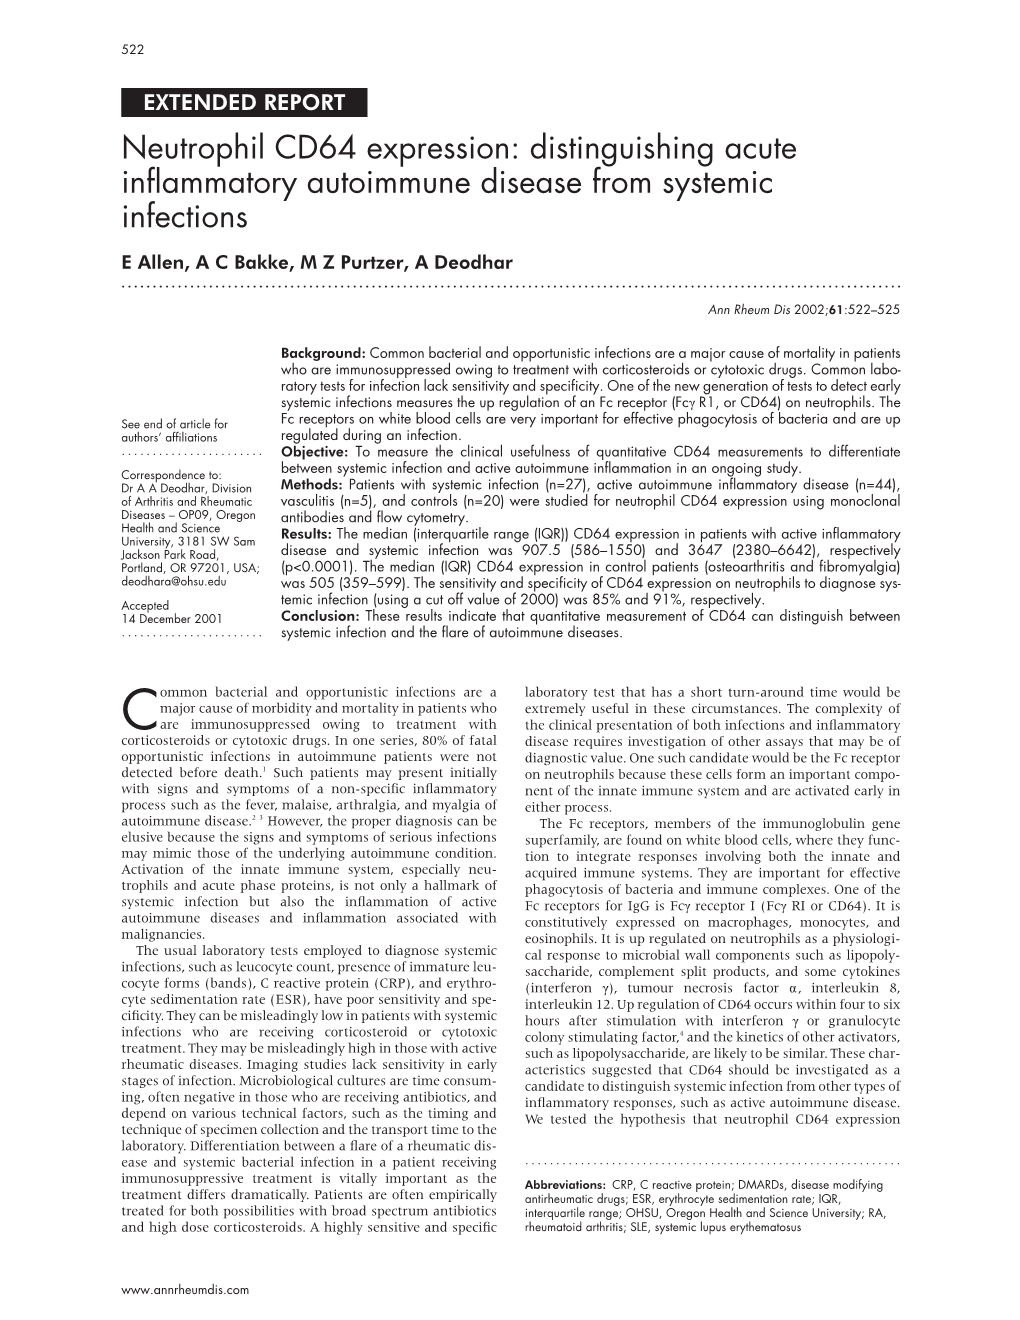 Neutrophil CD64 Expression: Distinguishing Acute Inflammatory Autoimmune Disease from Systemic Infections E Allen, a C Bakke, M Z Purtzer, a Deodhar